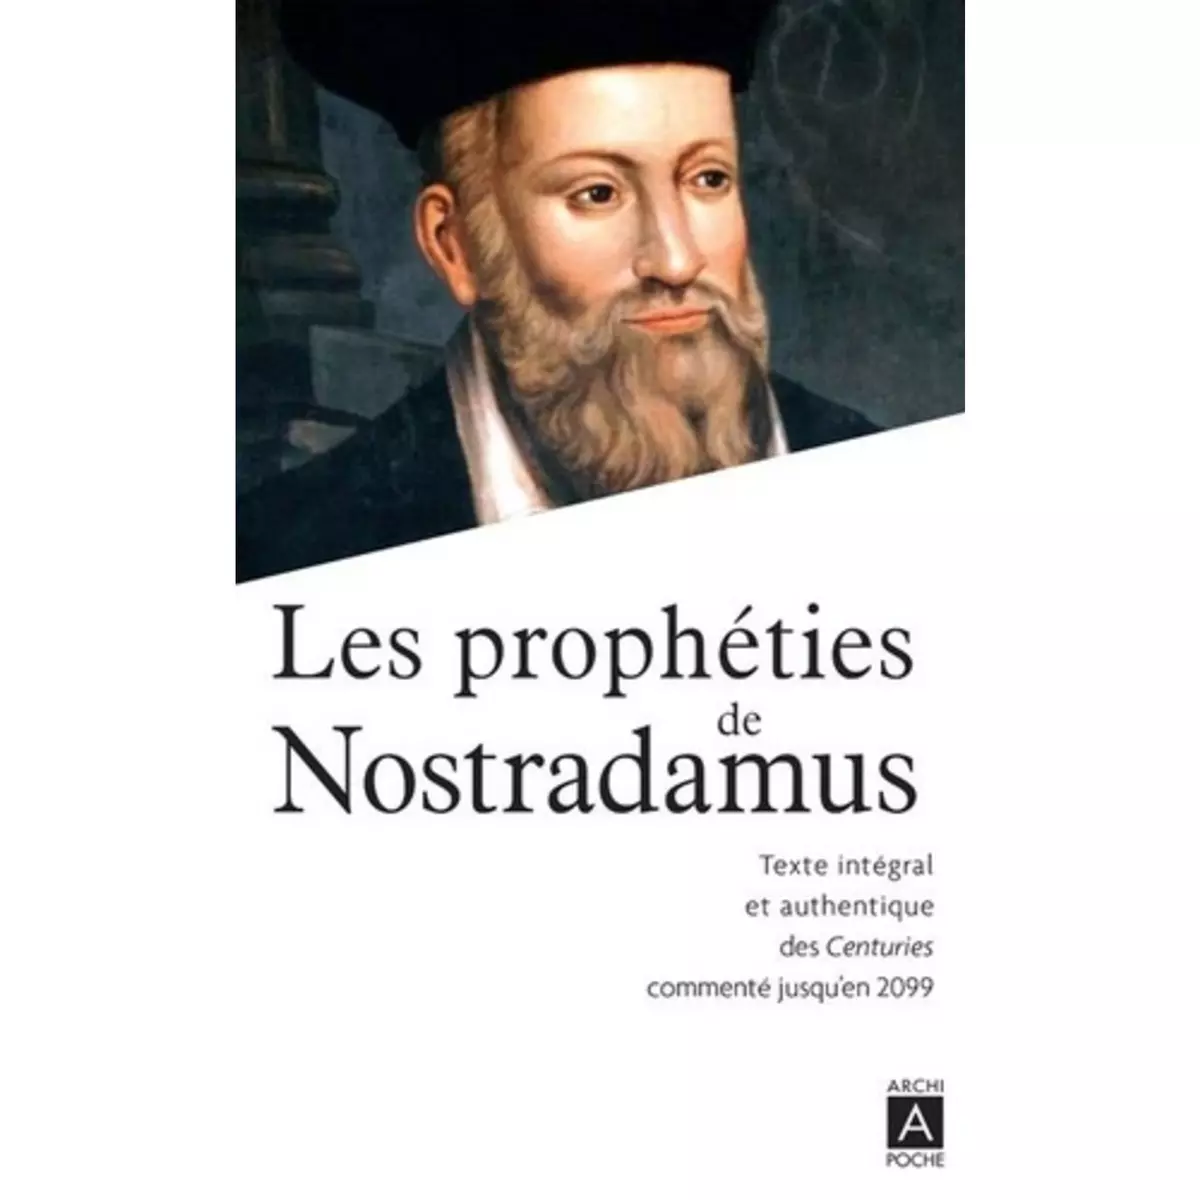  LES PROPHETIES DE NOSTRADAMUS. TEXTE INTEGRAL ET AUTHENTIQUE DES CENTURIES, Nostradamus